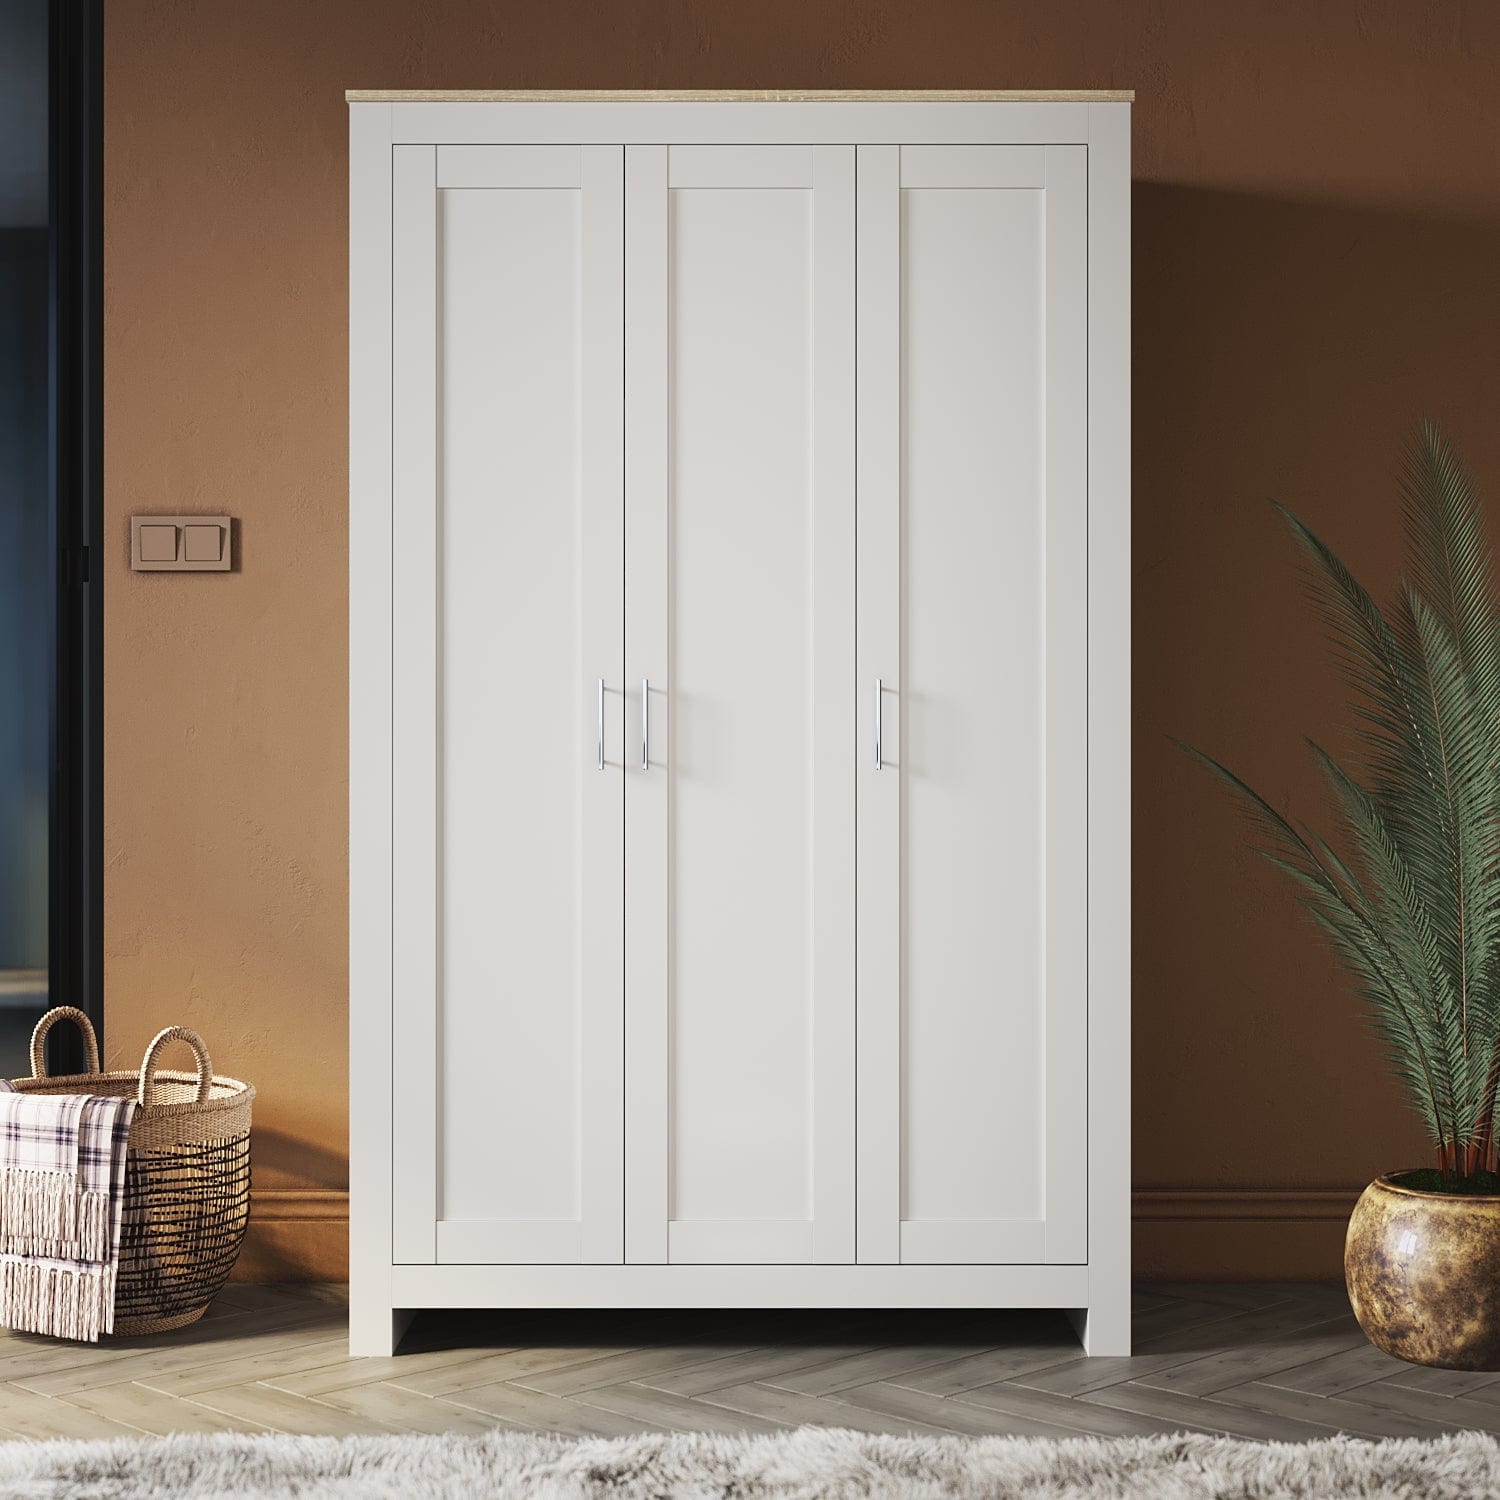 180cm Simple Design Wooden Storage Cabinet Large Grey Wardrobe with 3